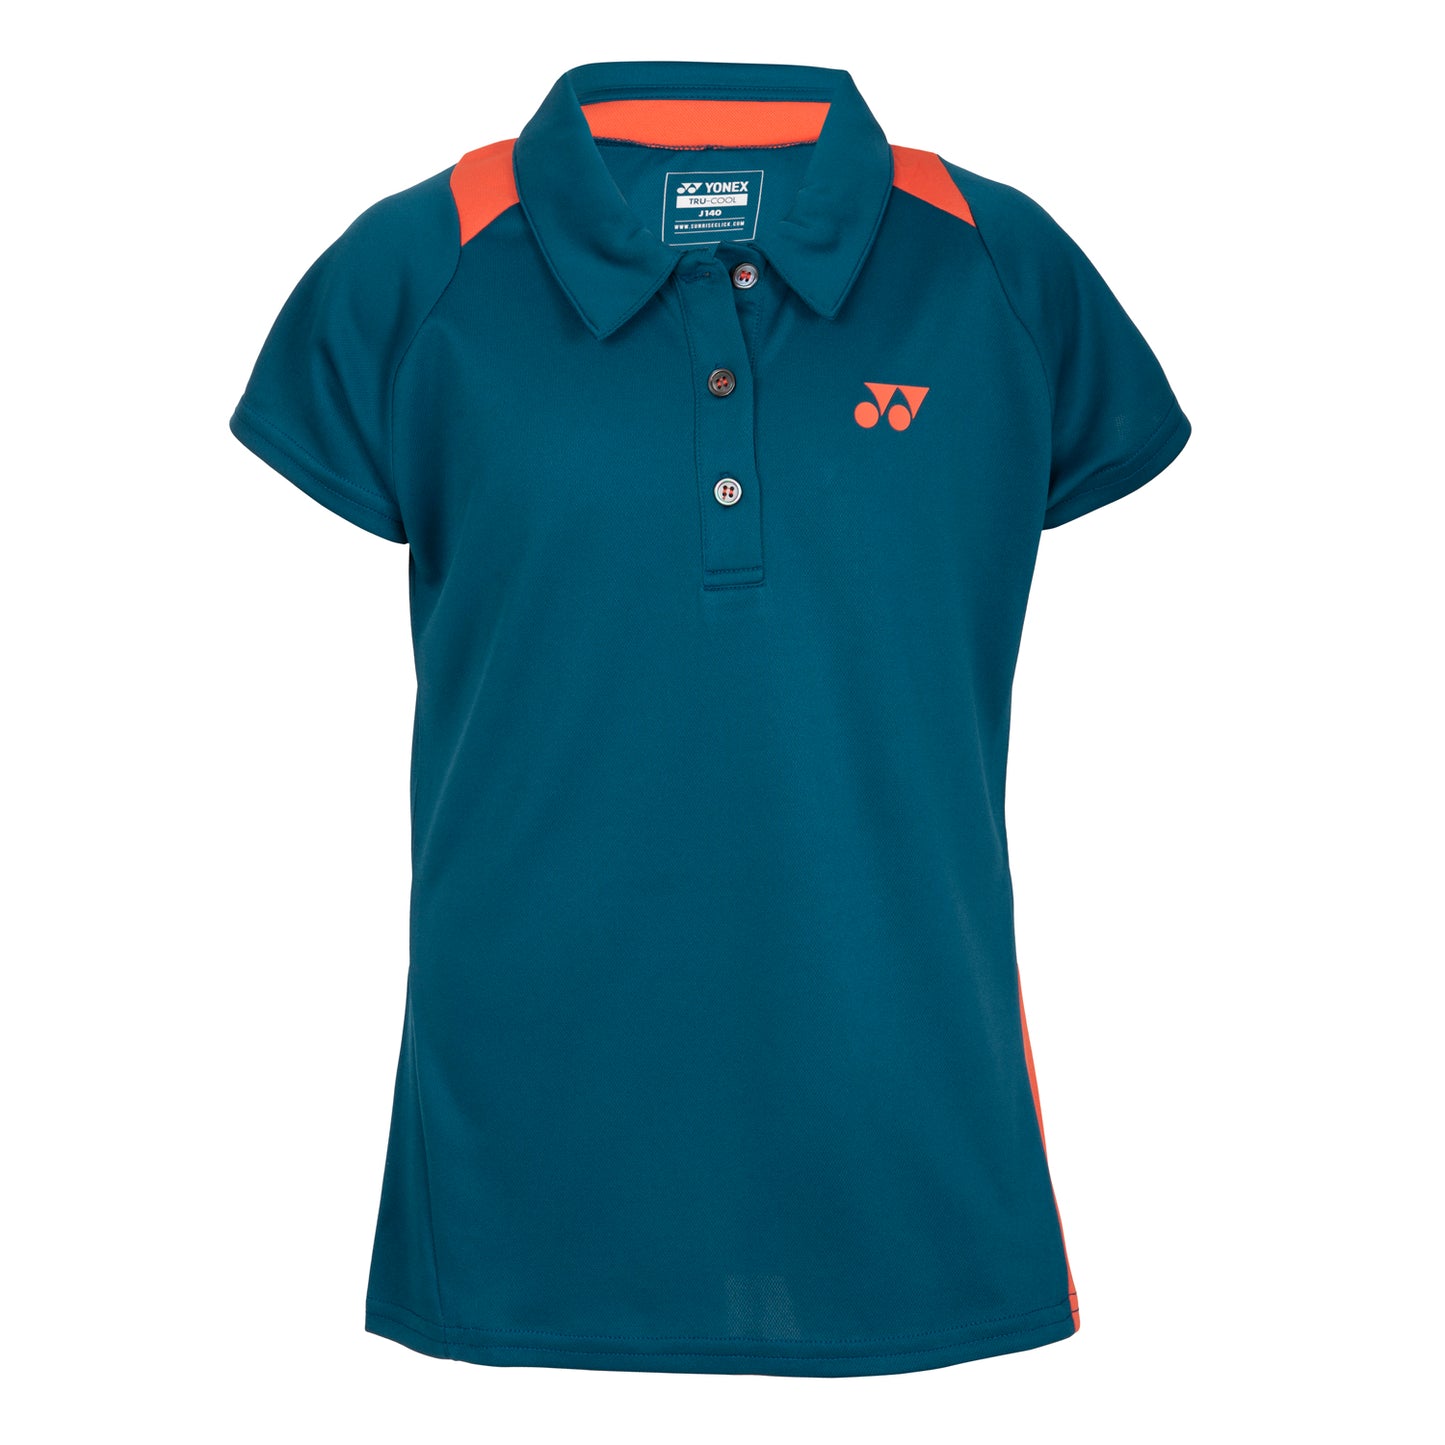 Yonex Badminton Polo T Shirt for Women, Corsair - Best Price online Prokicksports.com